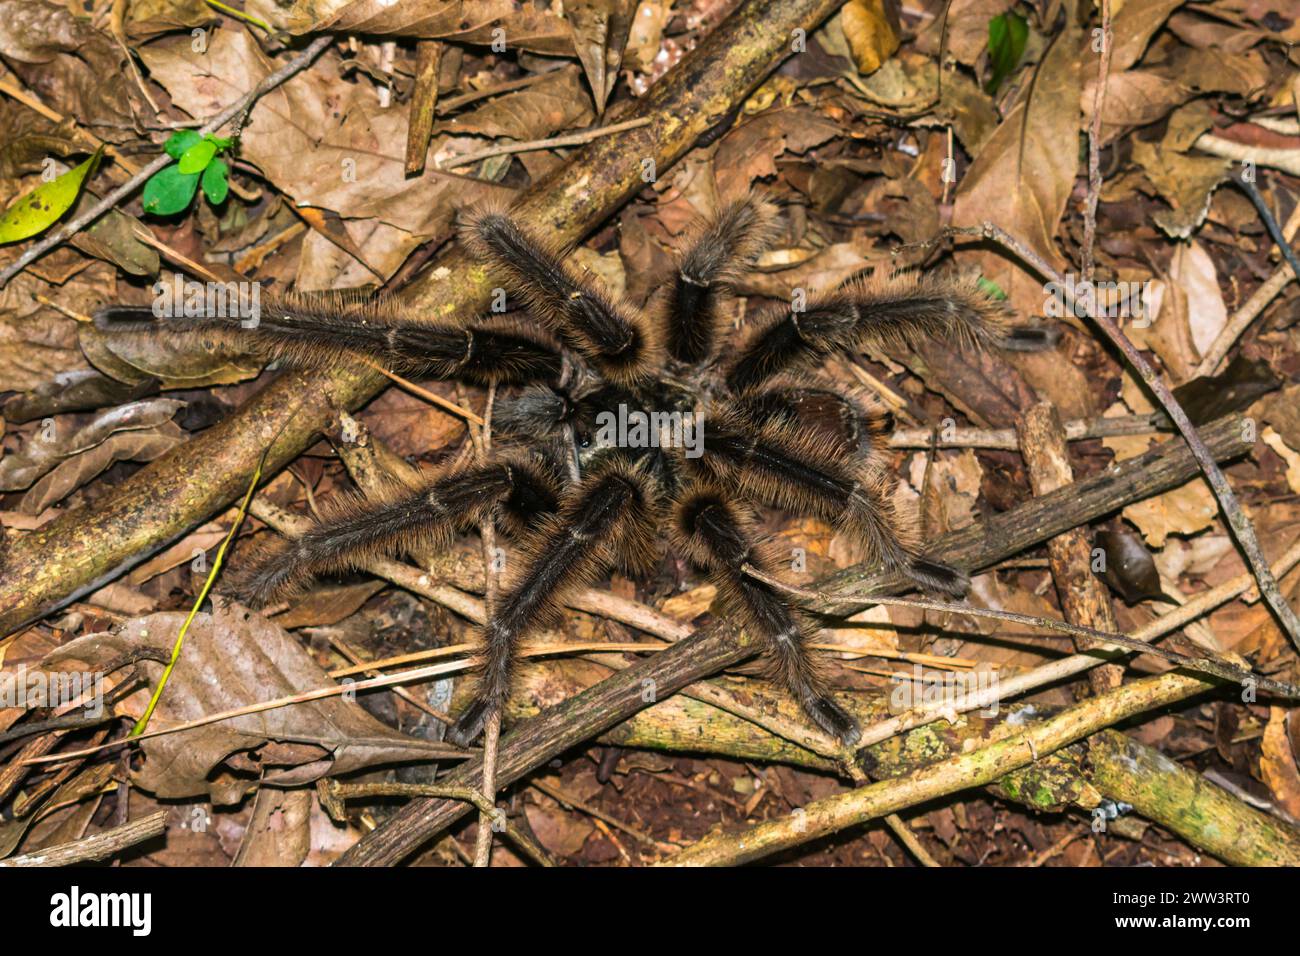 Wild native tarantula Grammostola sp. in the forest - Sao Francisco de Paula, South of Brazil Stock Photo